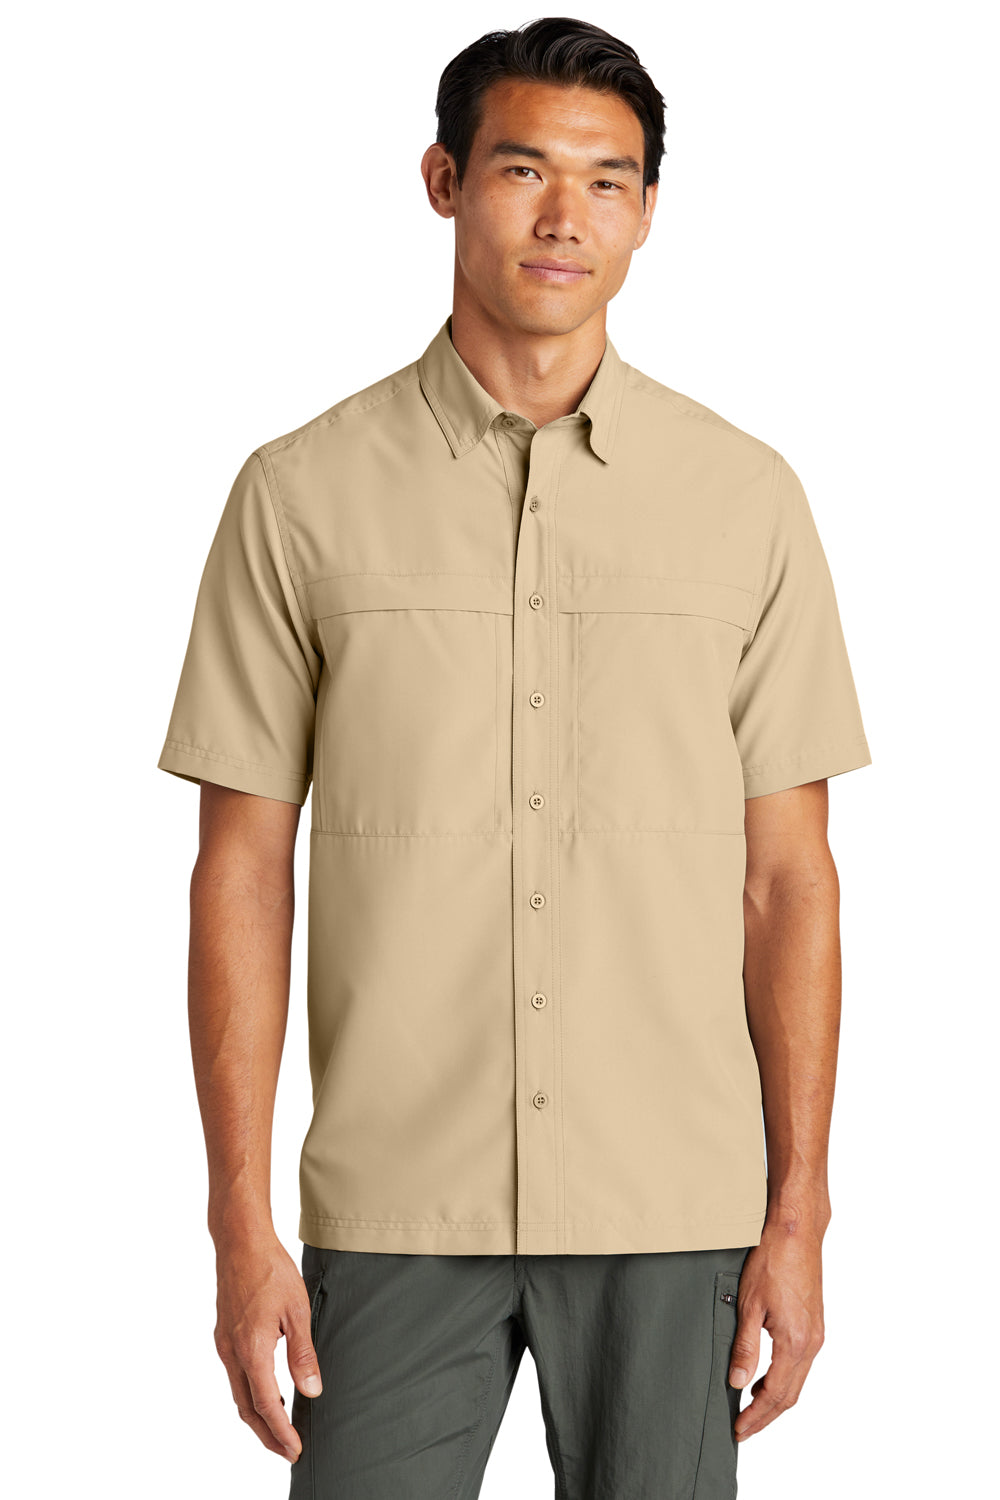 Port Authority W961 UV Daybreak Short Sleeve Button Down Shirt Oat Front